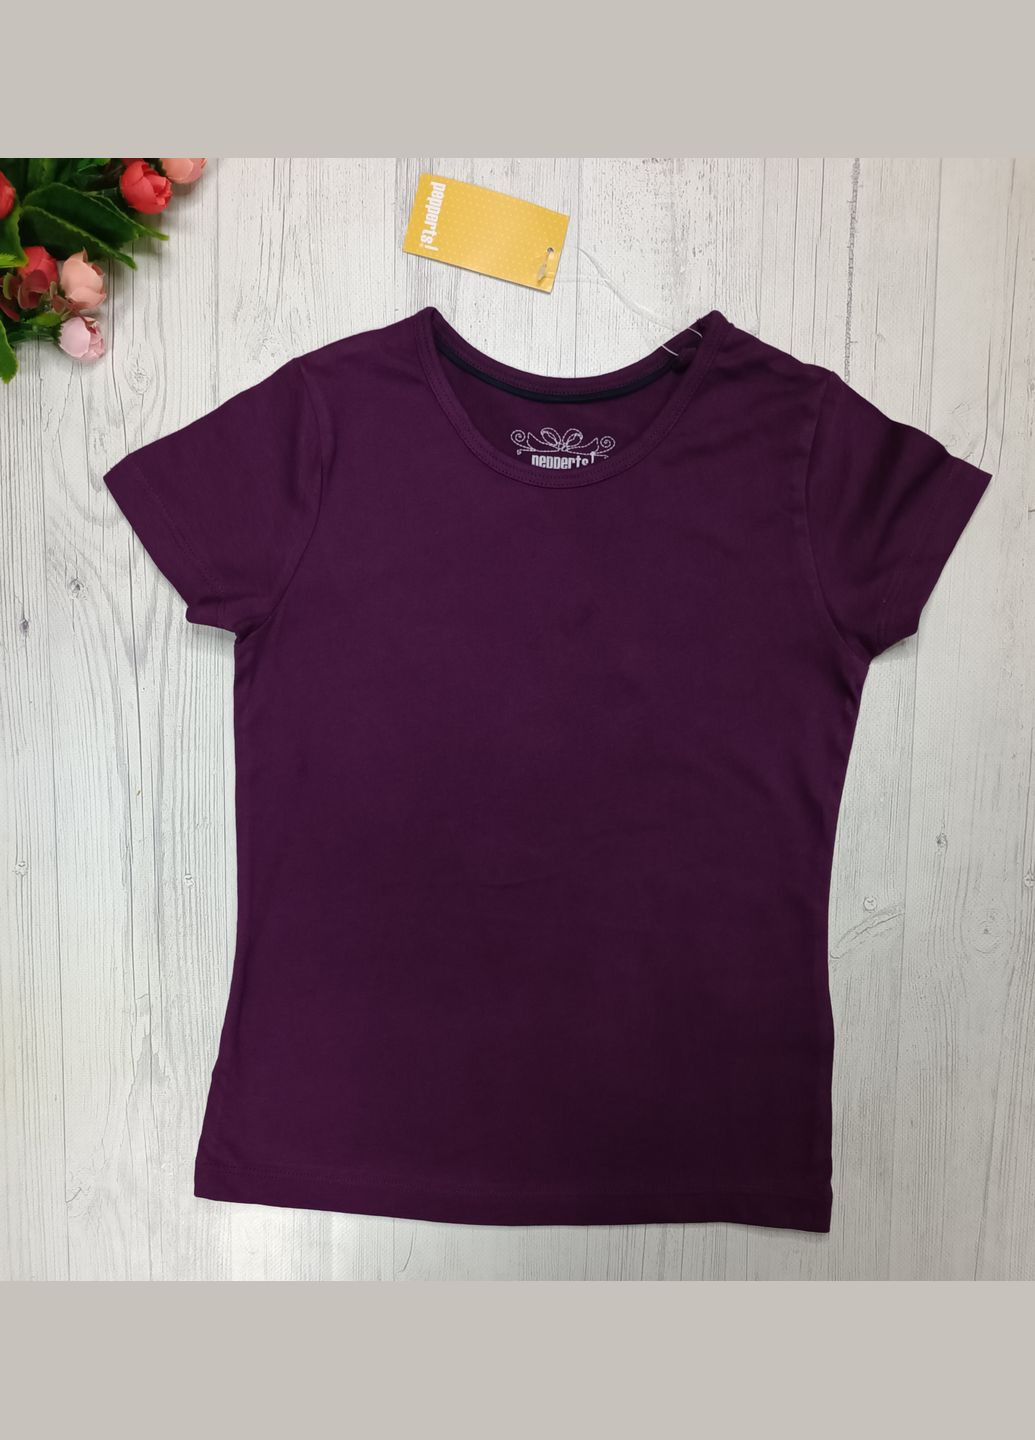 Фиолетовая летняя футболка для девочки Pepperts